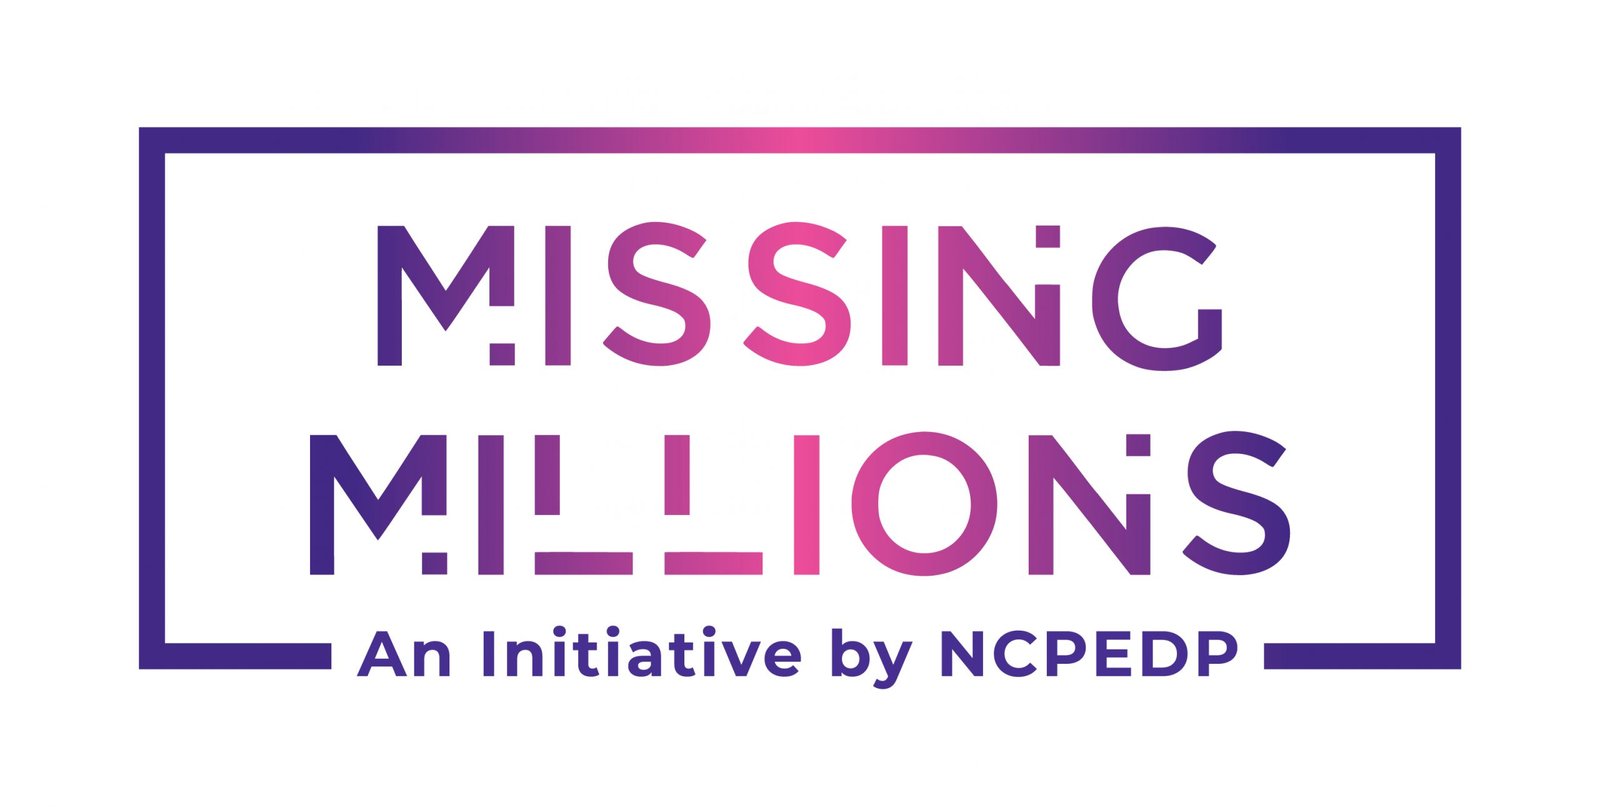 Missing Million Campaign